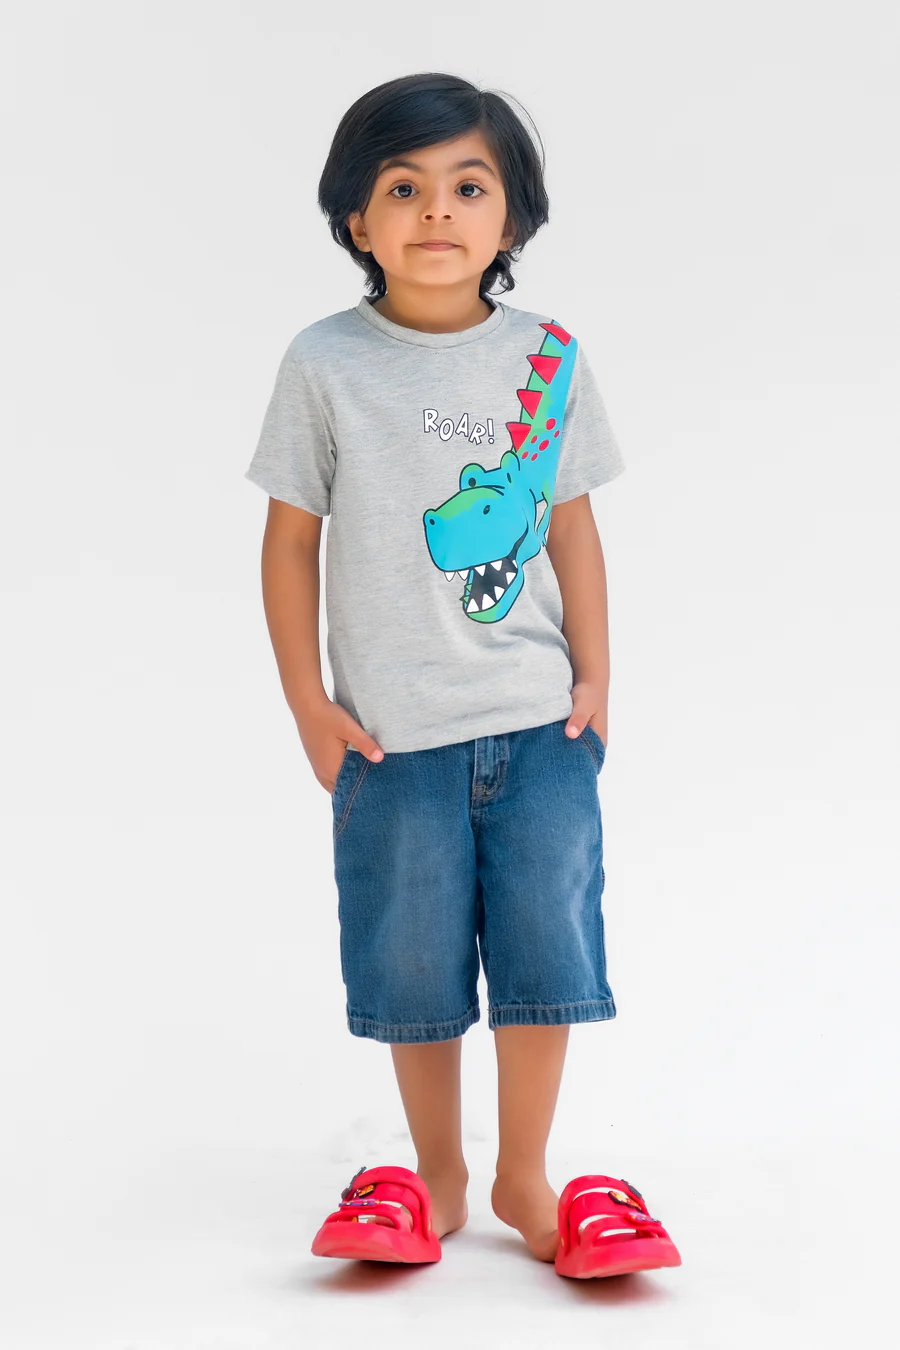 Roar Dino Half Sleeves T-Shirts For Kids - Grey